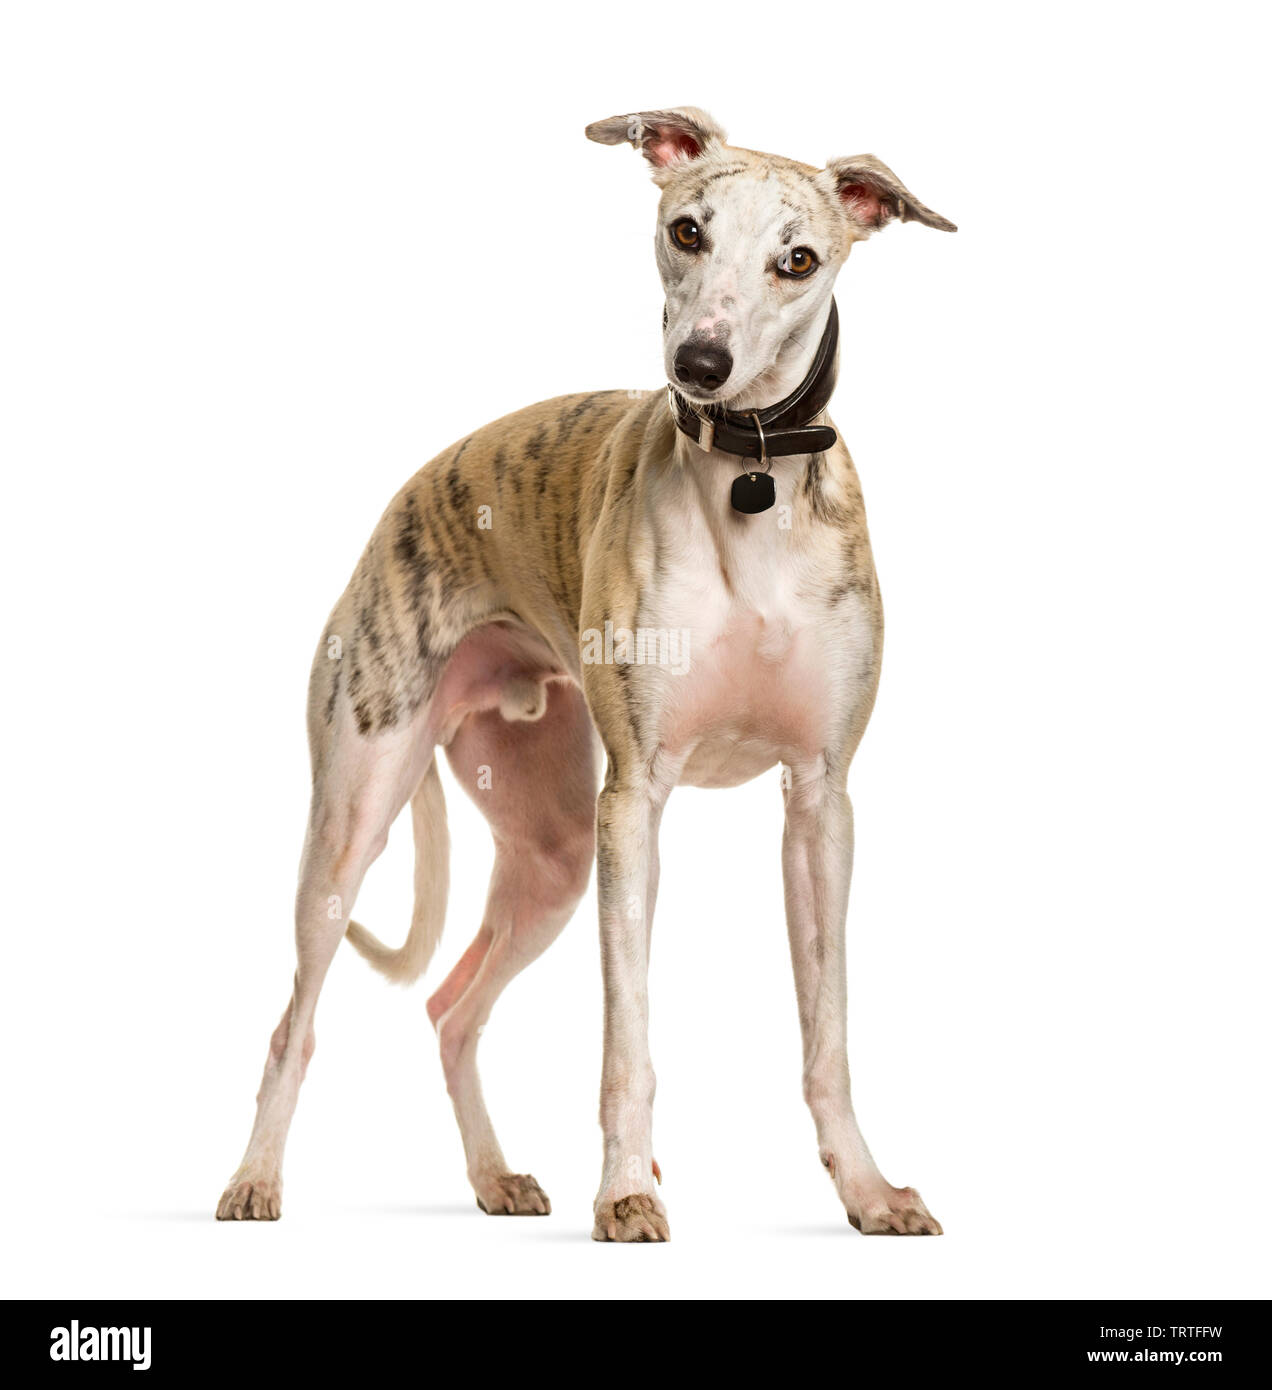 Sighthound dog standing against white background Stock Photo